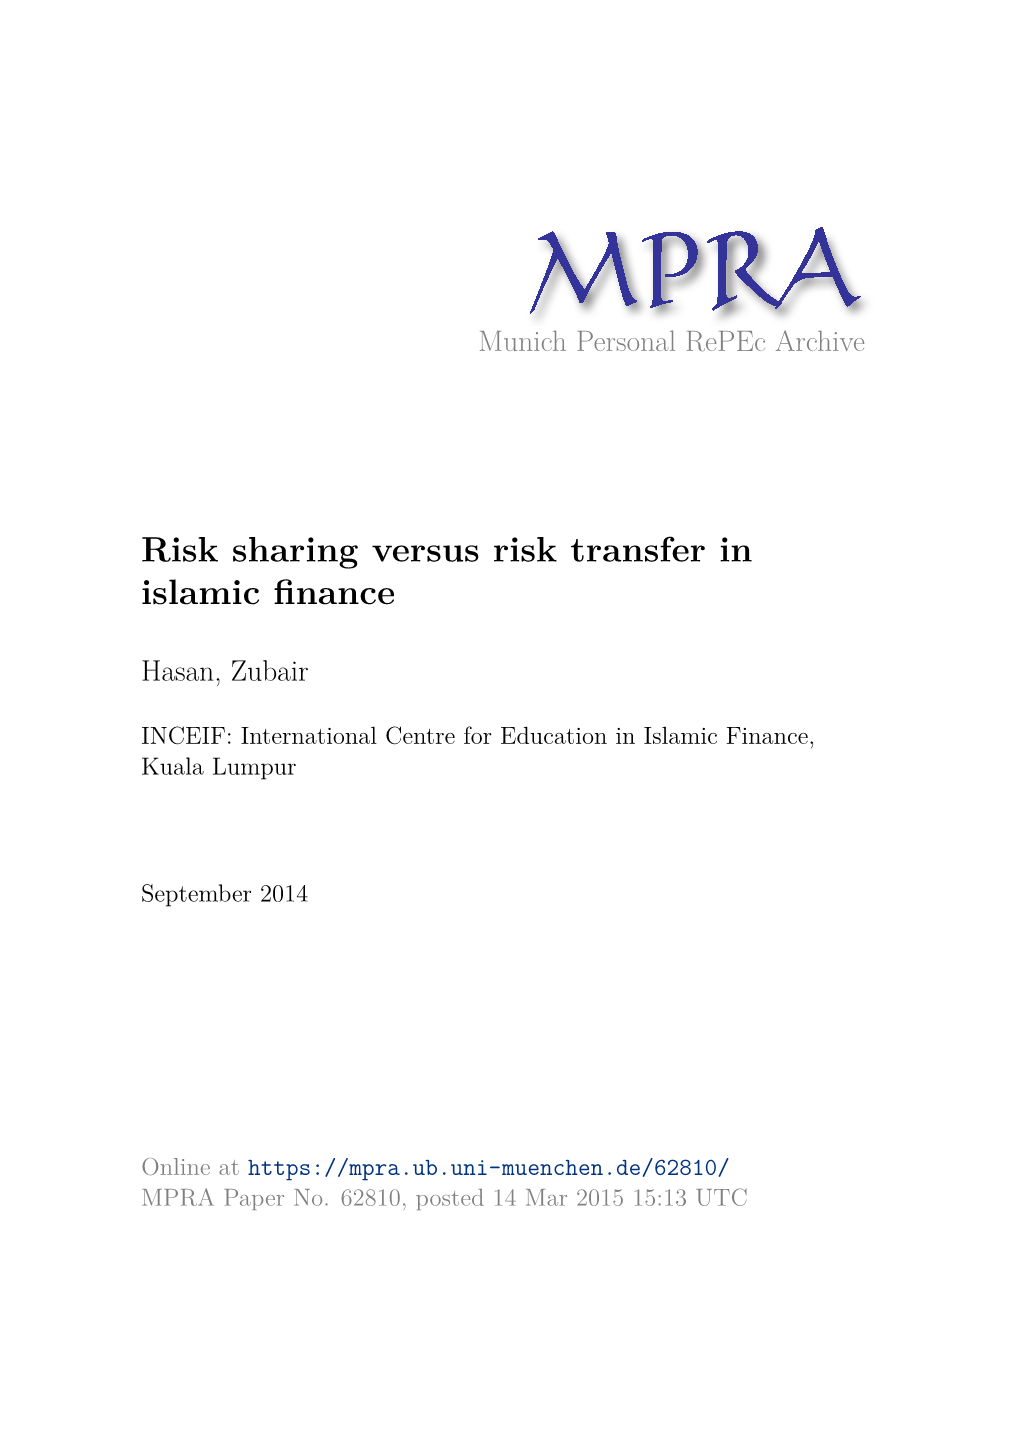 Risk Sharing Versus Risk Transfer in Islamic Finance